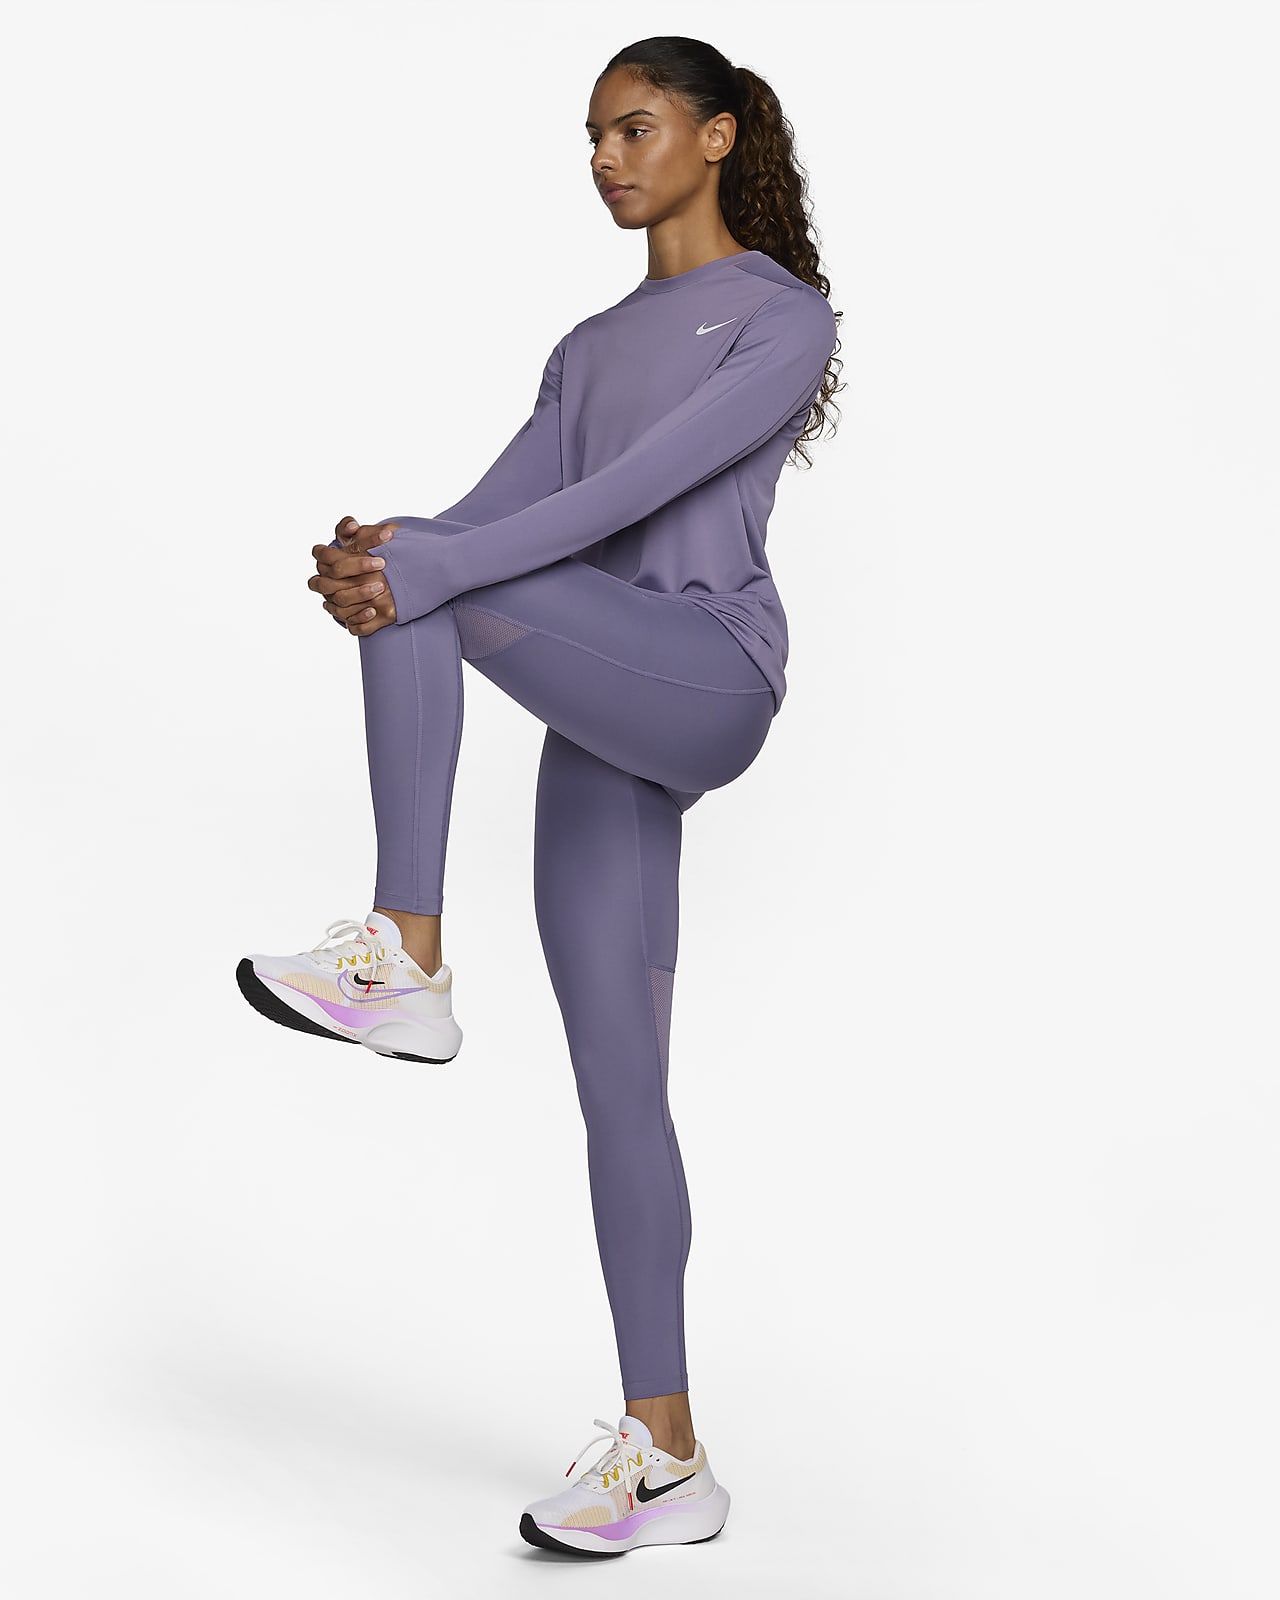 Nike Pro Tights 365 - Violet/Black/White Woman